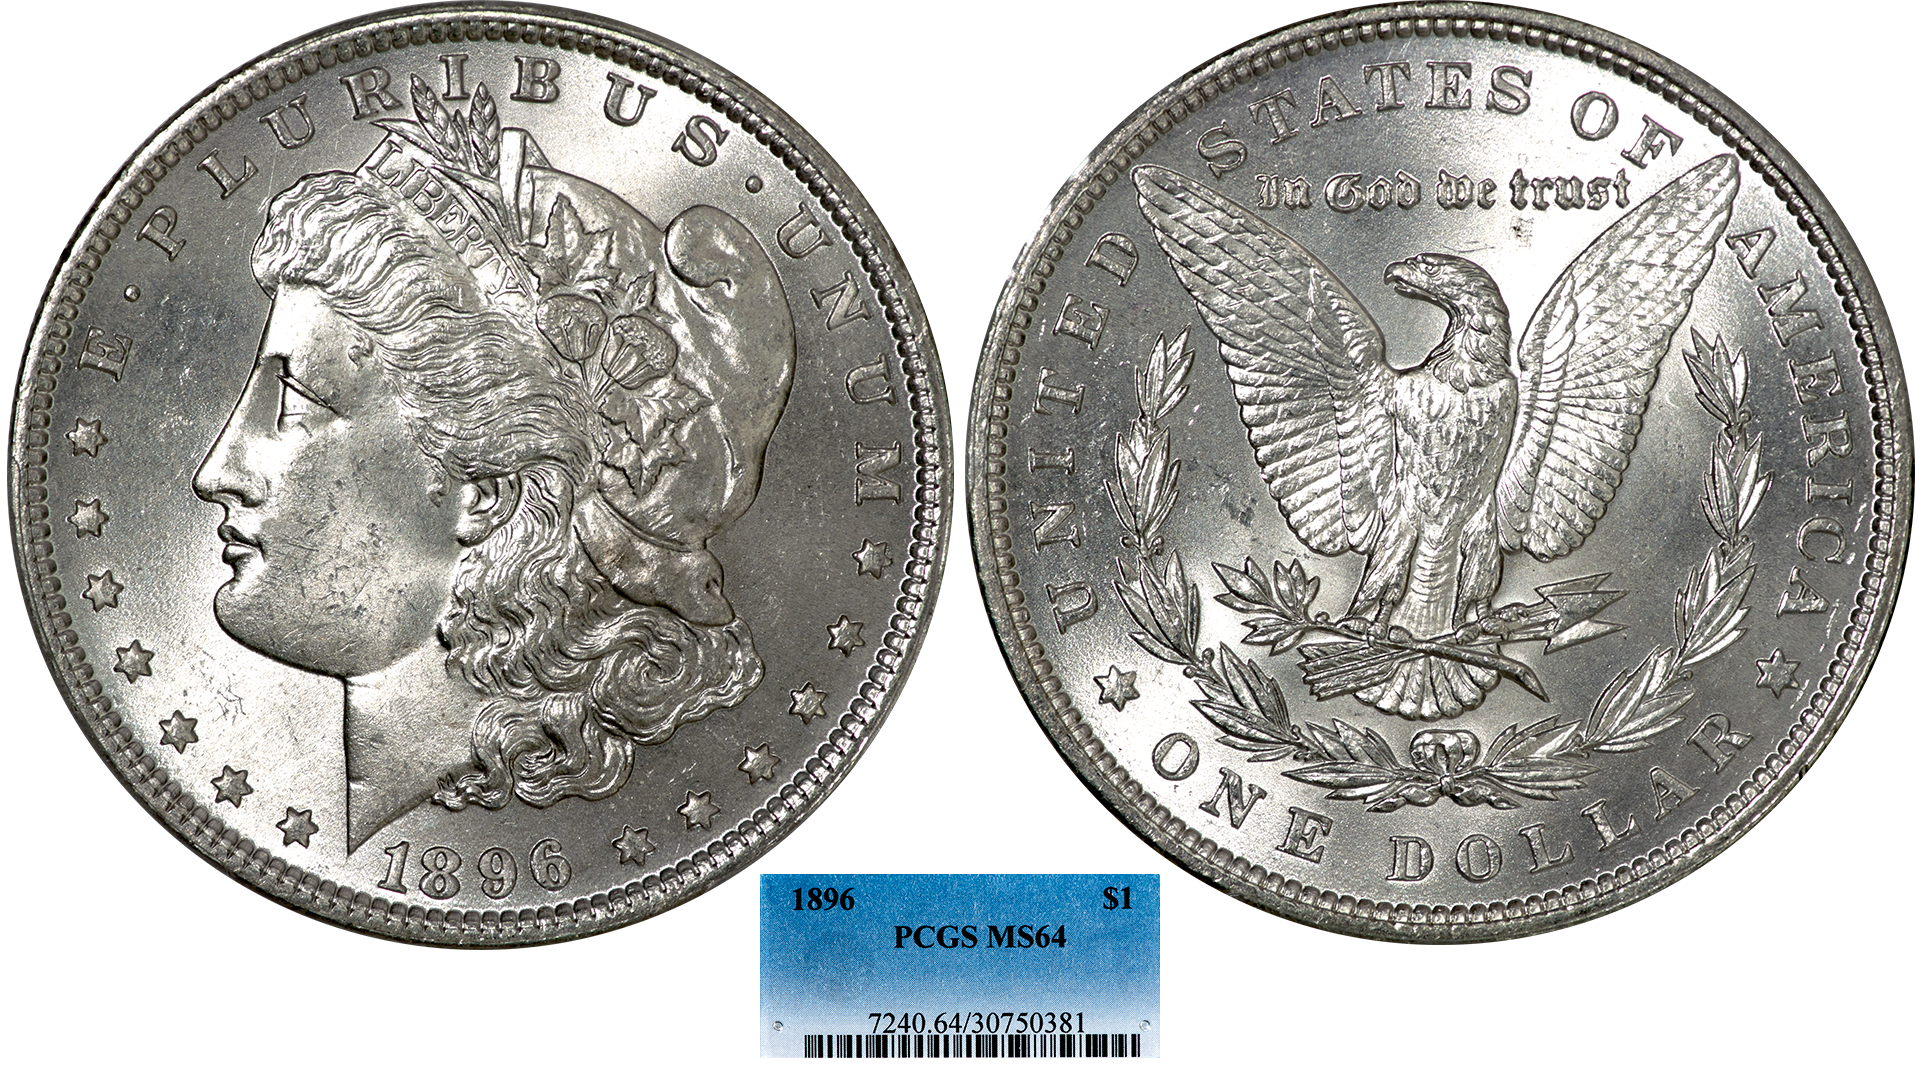 PCGS MS64 1896 US Morgan Silver Dollar $1